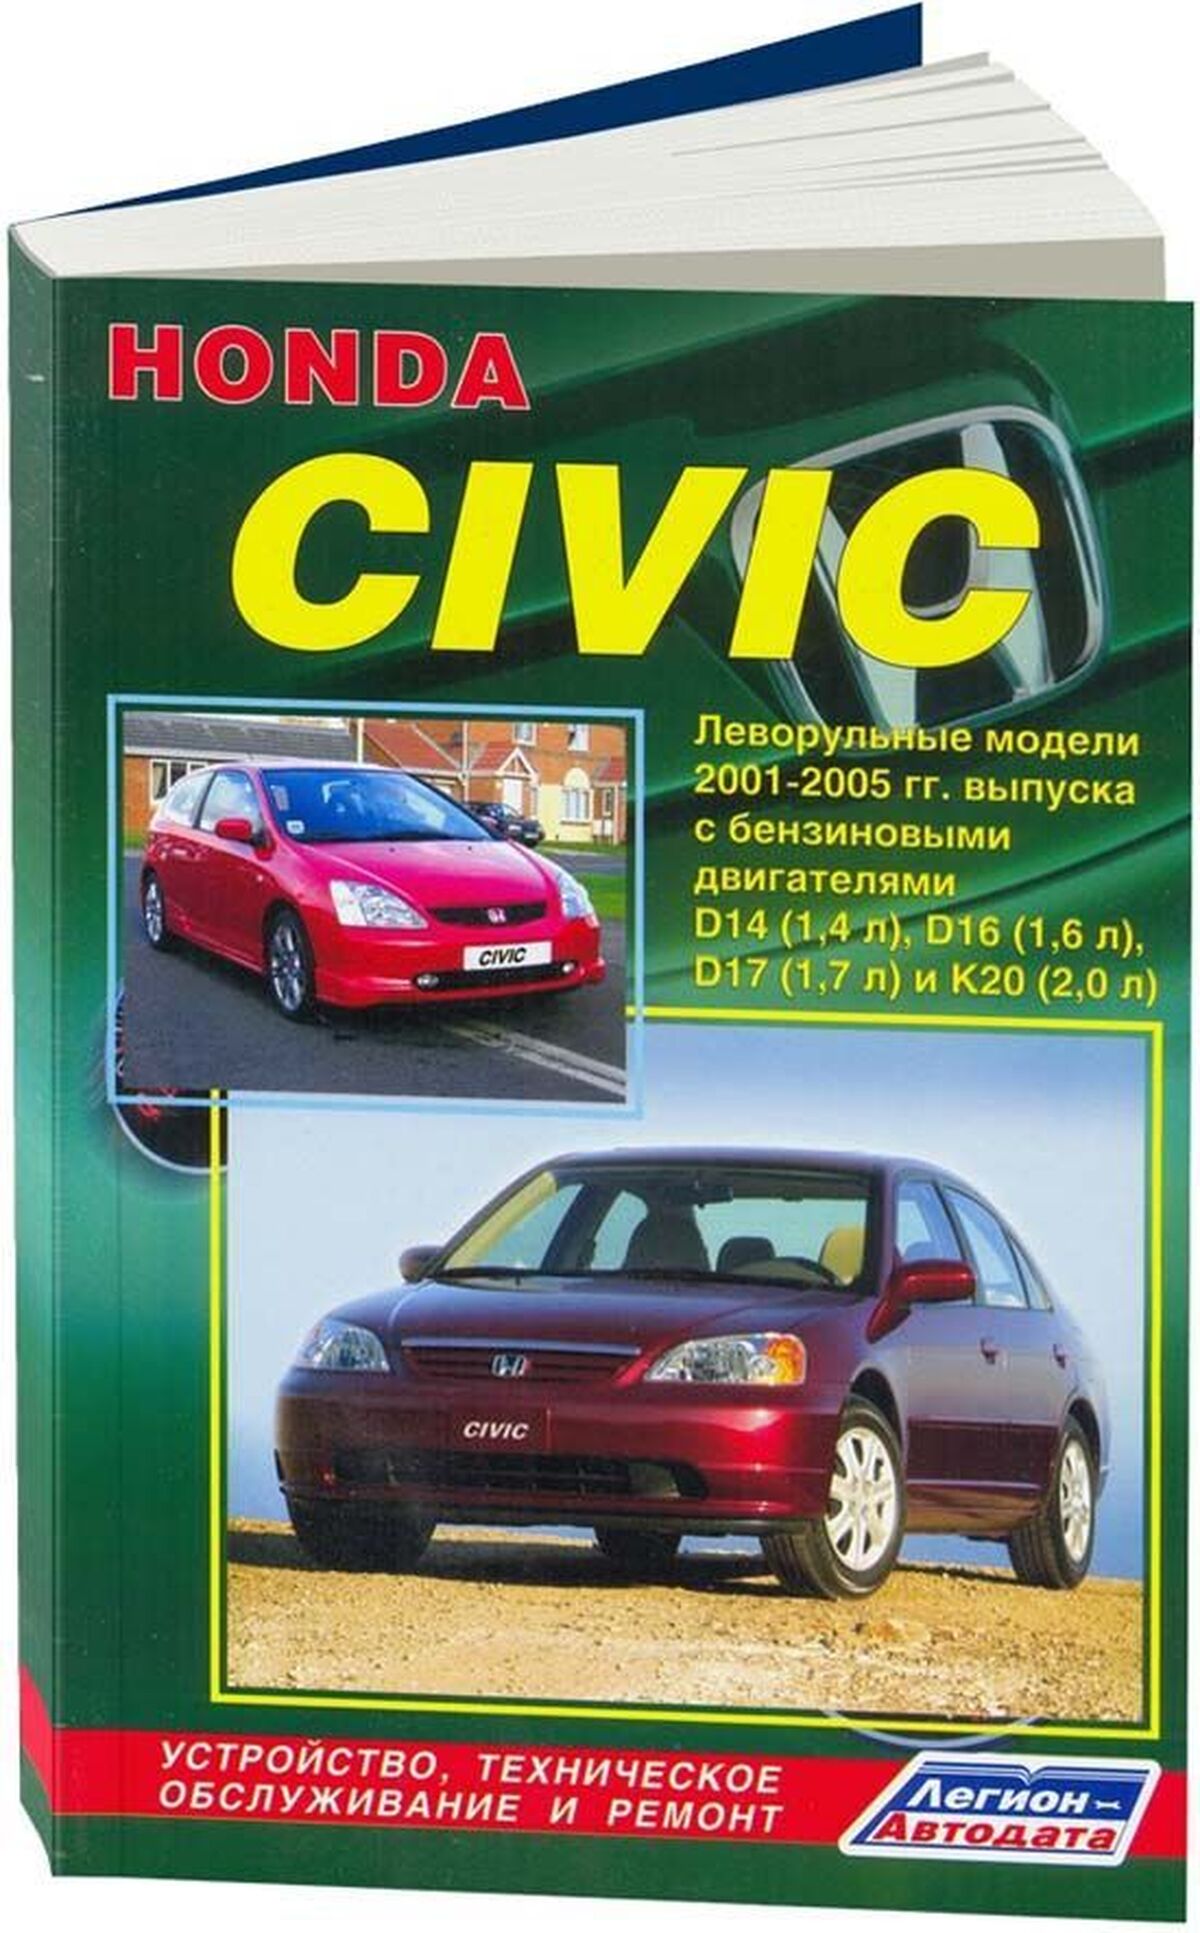 Книга: HONDA CIVIC левый руль (б) 2001-2005 г.в., рем., экспл., то | Легион-Aвтодата